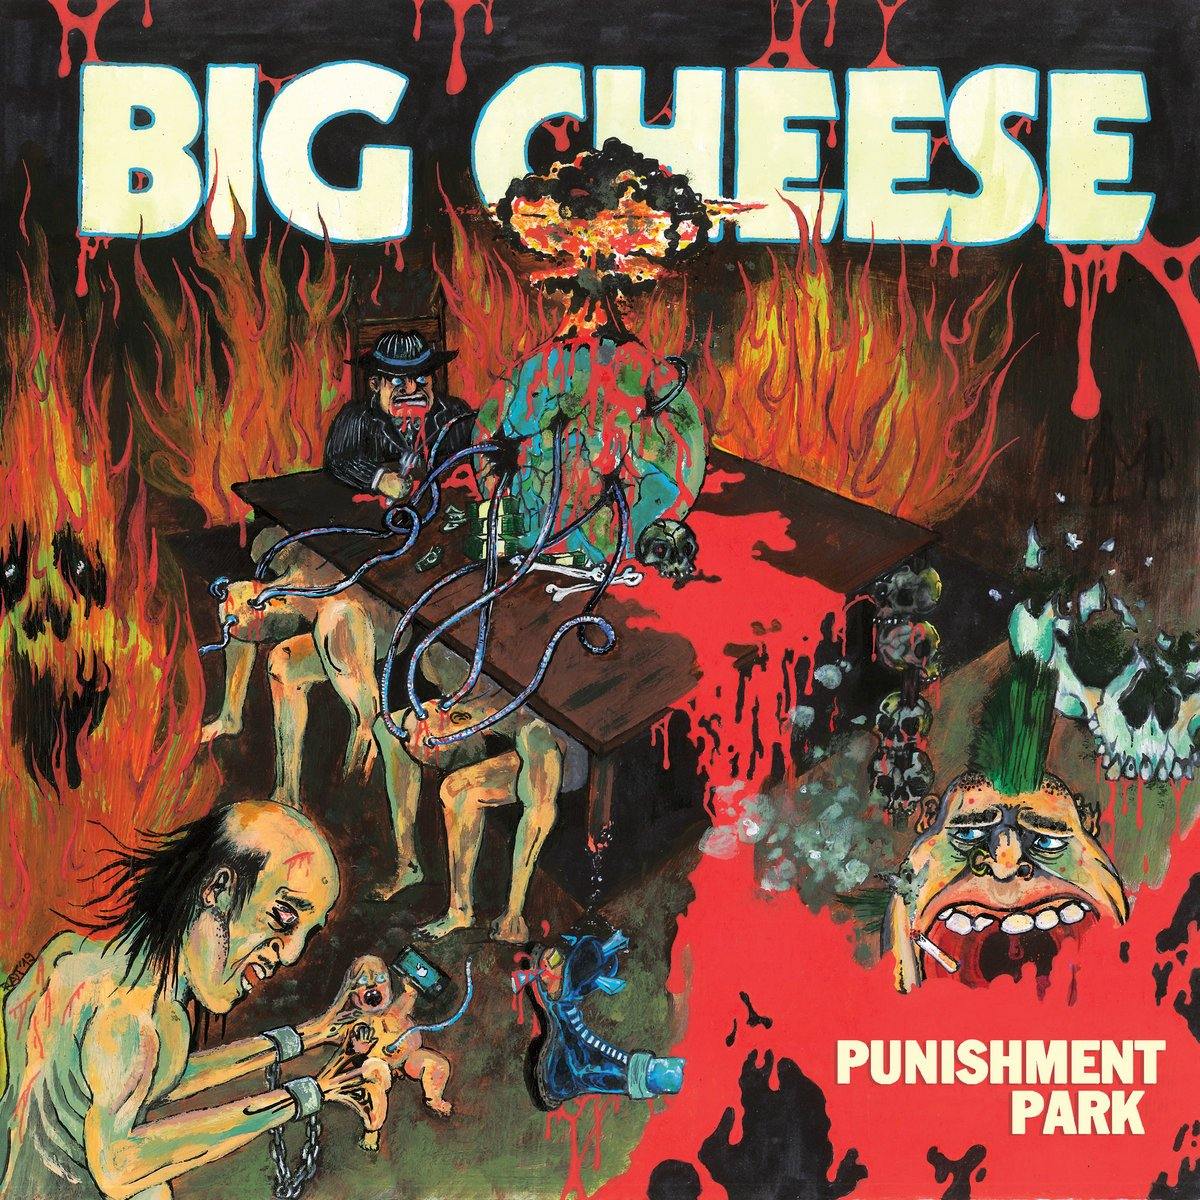 Buy – Big Cheese "Punishment Park" 12" – Band & Music Merch – Cold Cuts Merch